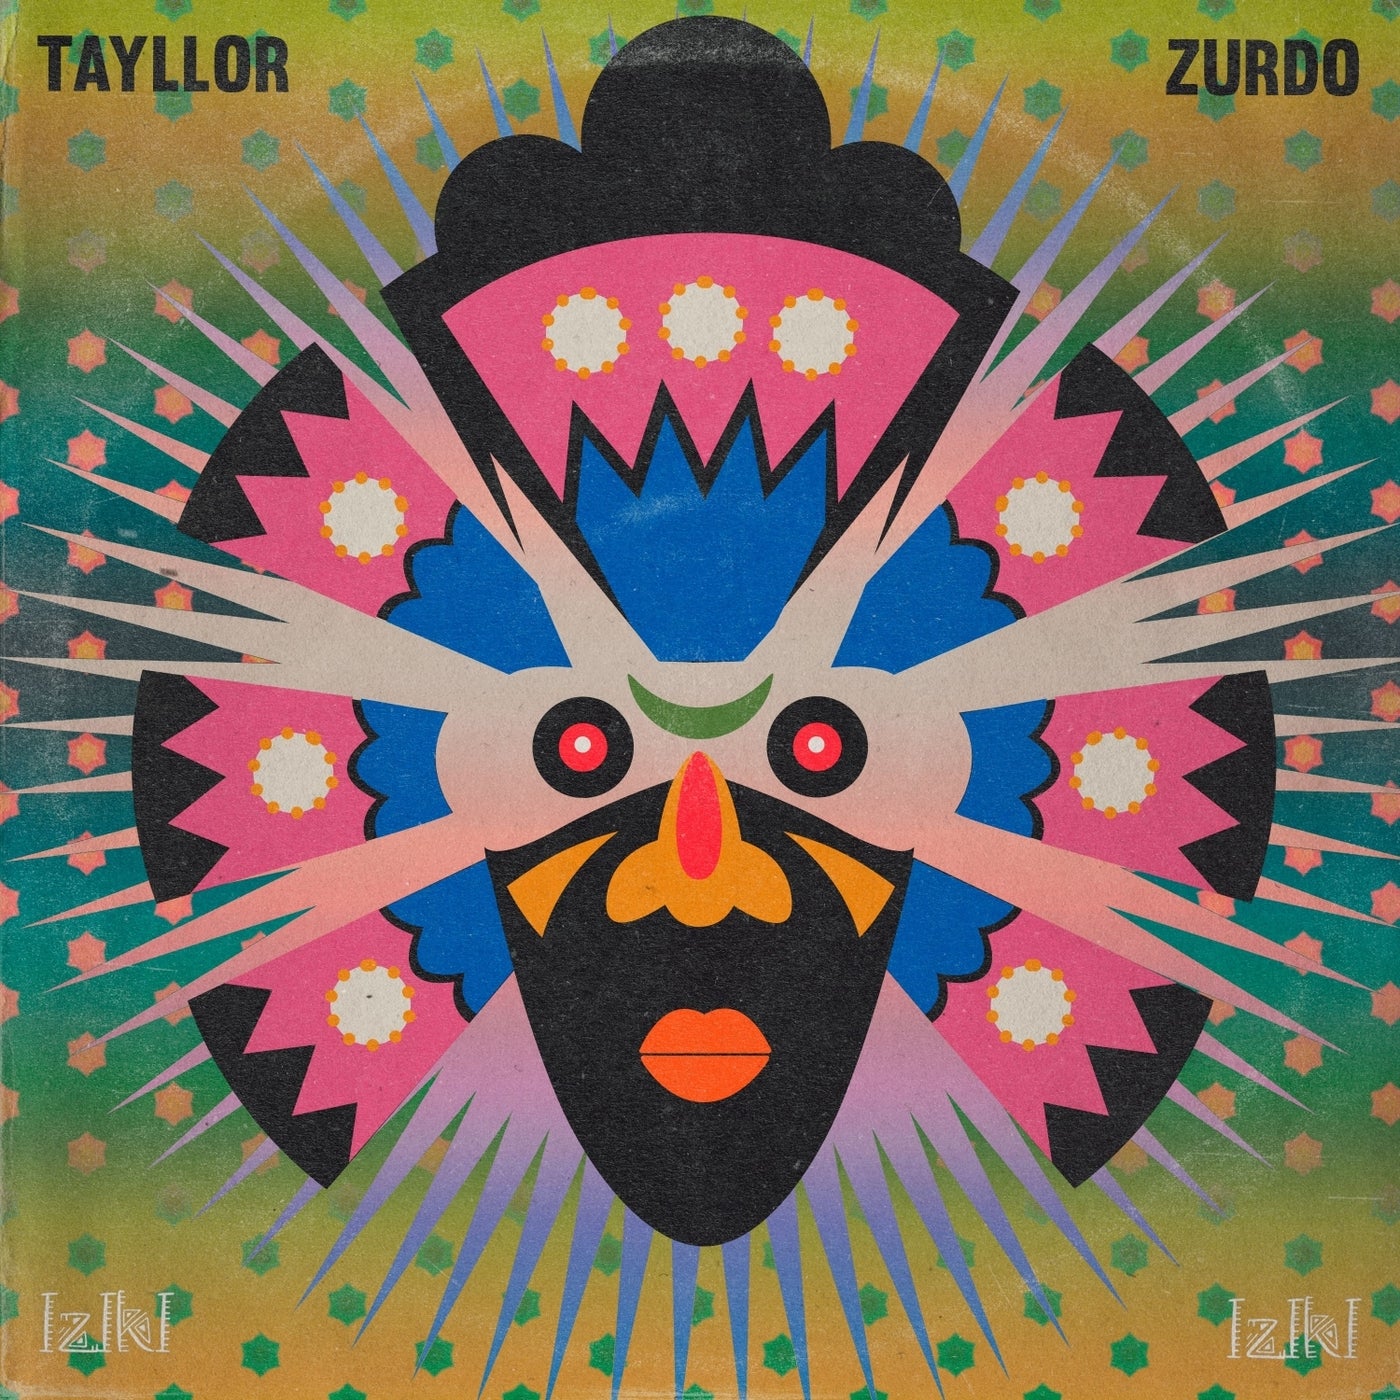 image cover: Tayllor - Zurdo on IZIKI